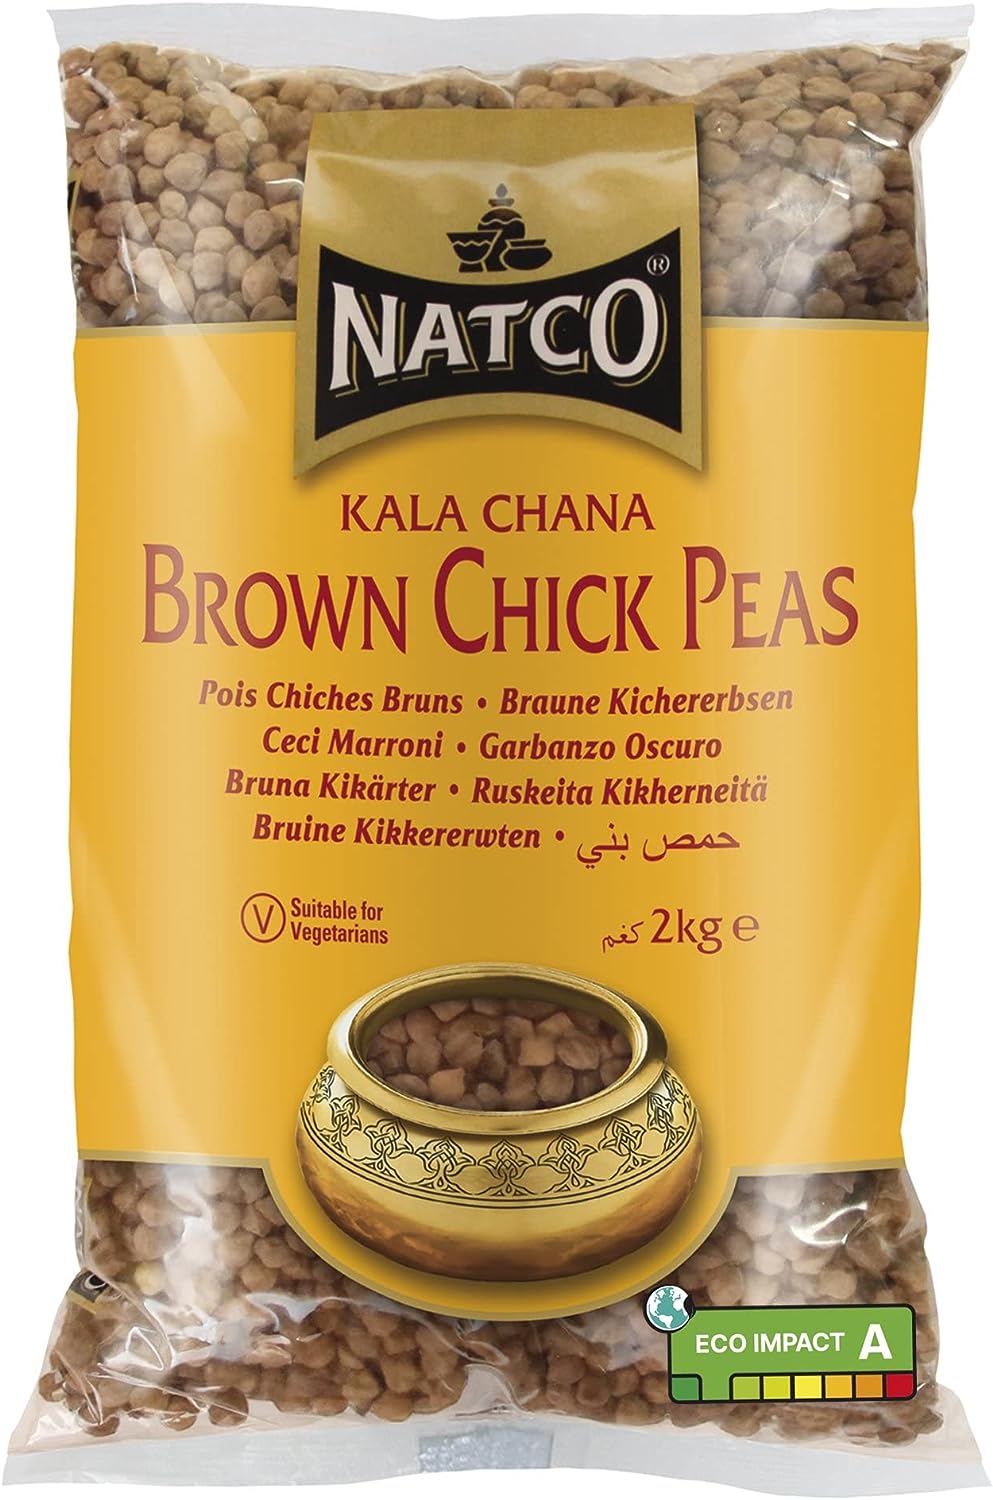 Natco Premium Brown Chick Peas (Kala Chana) 2kg